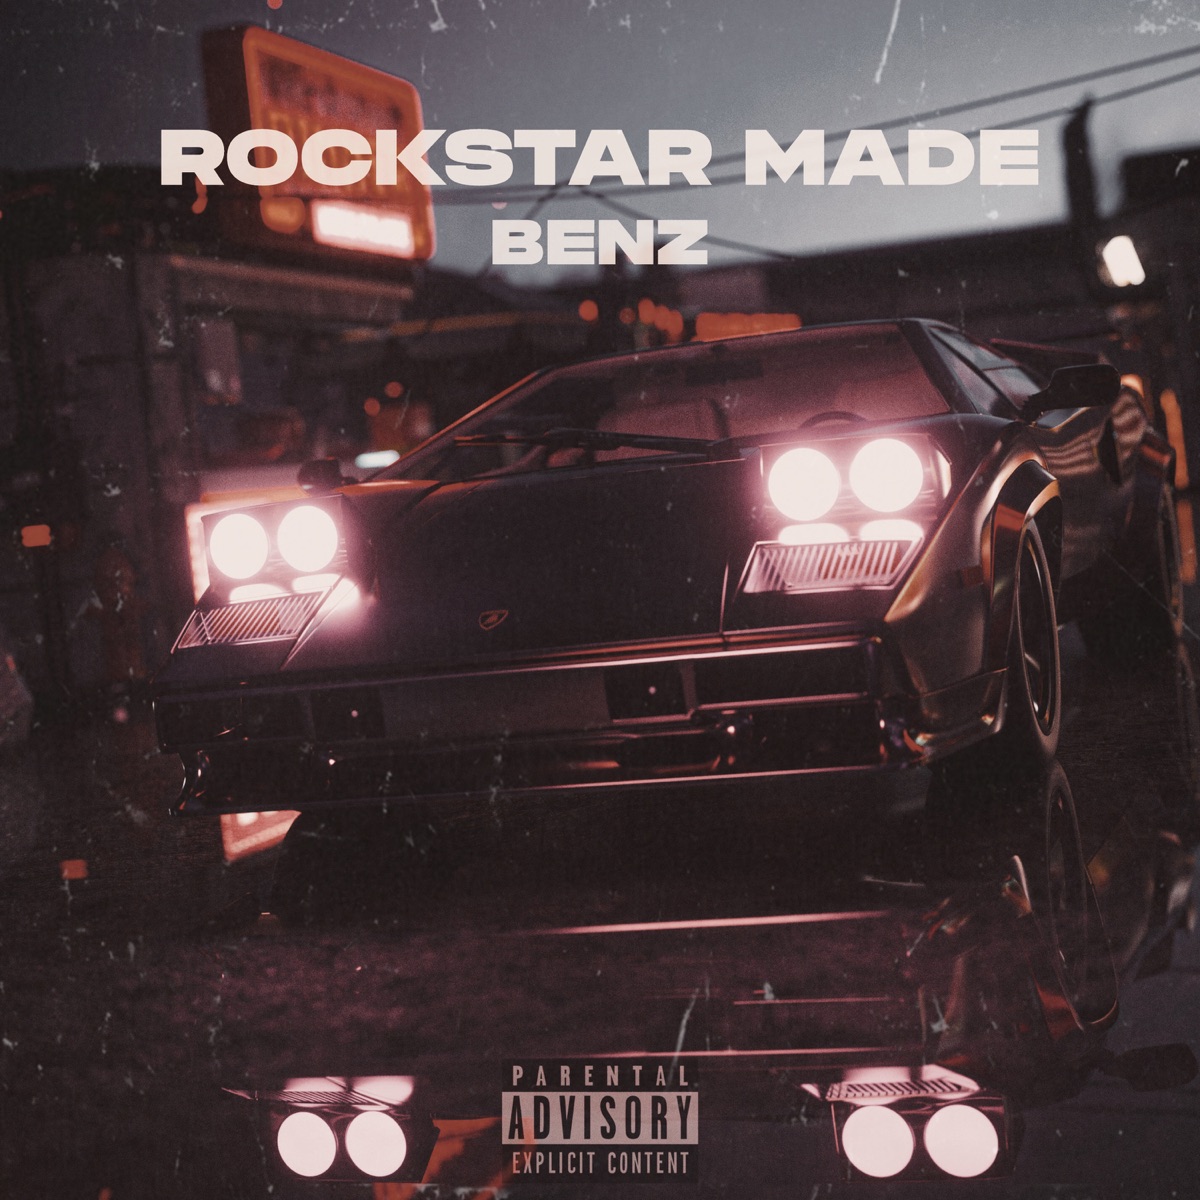 Rockstar Made - Single - Album by benz - Apple Music